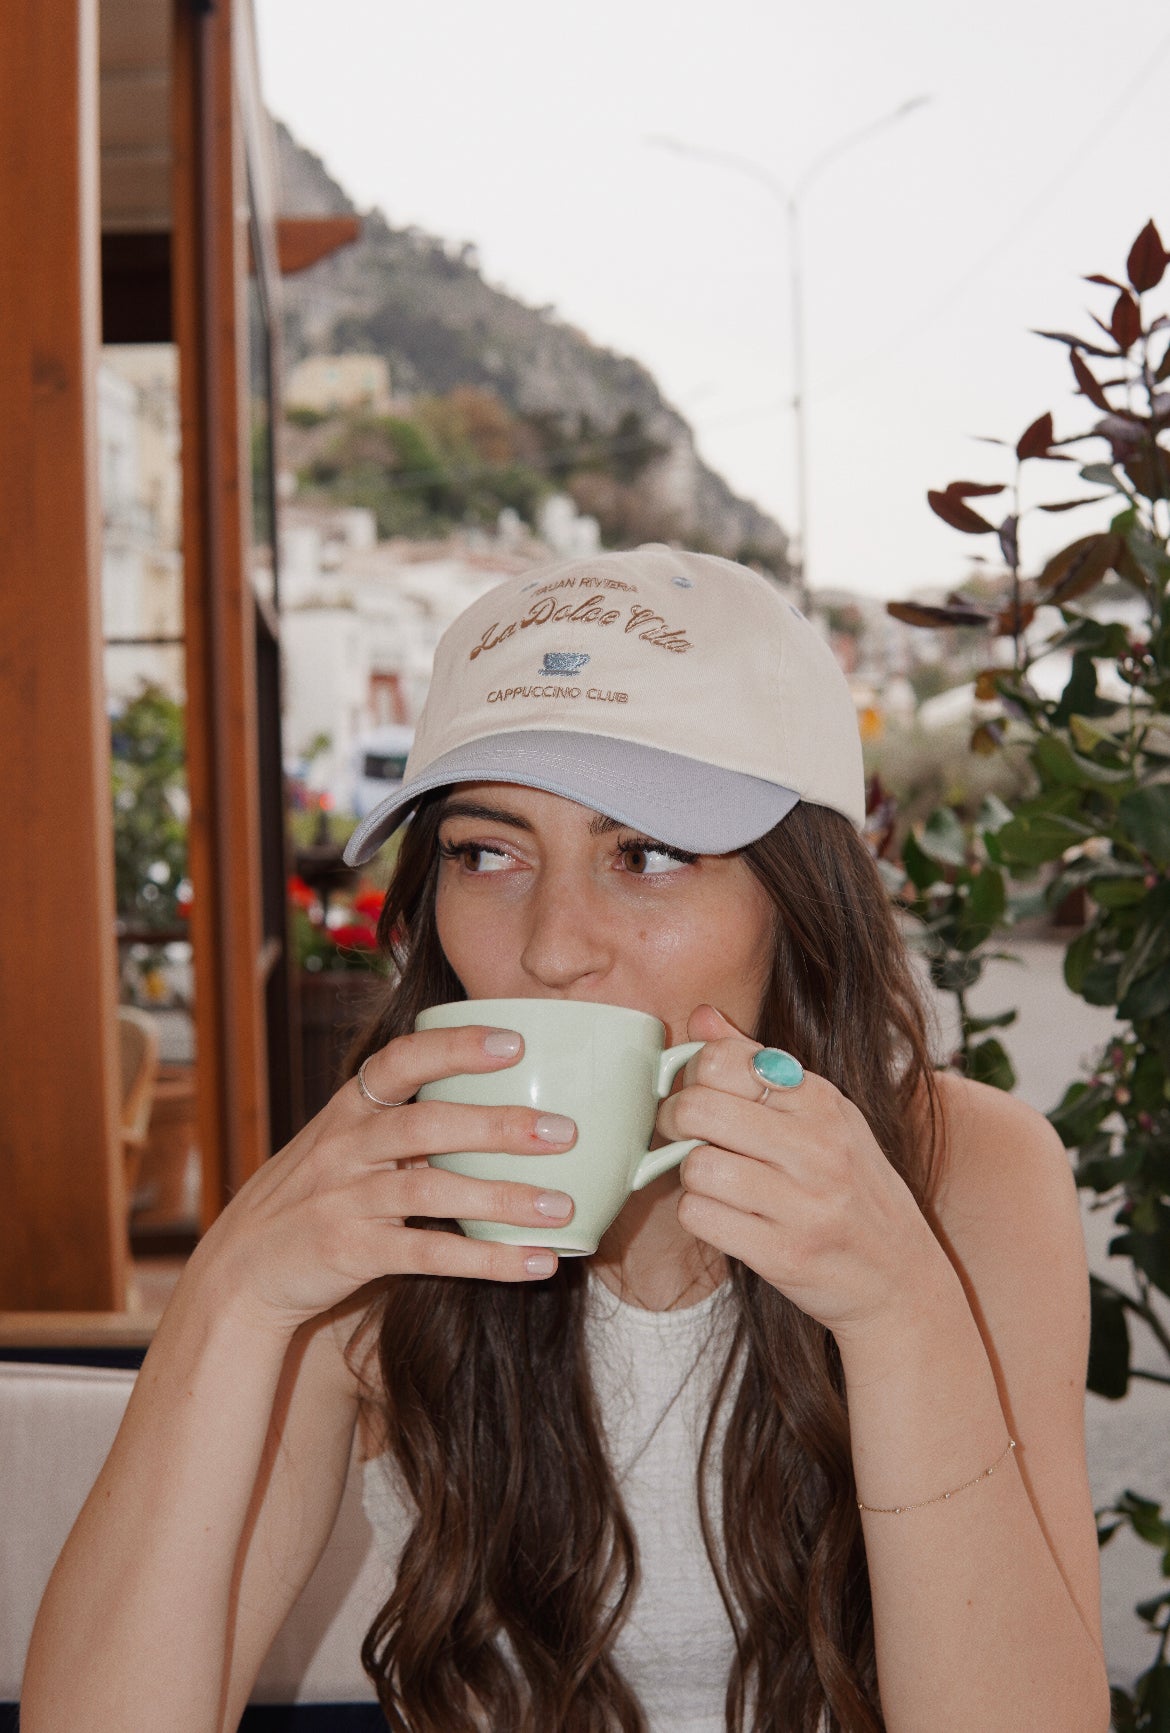 'La Dolce Vita' hat dad cap, Italian cafe culture cappuccino hat. Two toned blue & cream dad cap, satin interior ball cap. Embroidered women's Italy baseball cap 